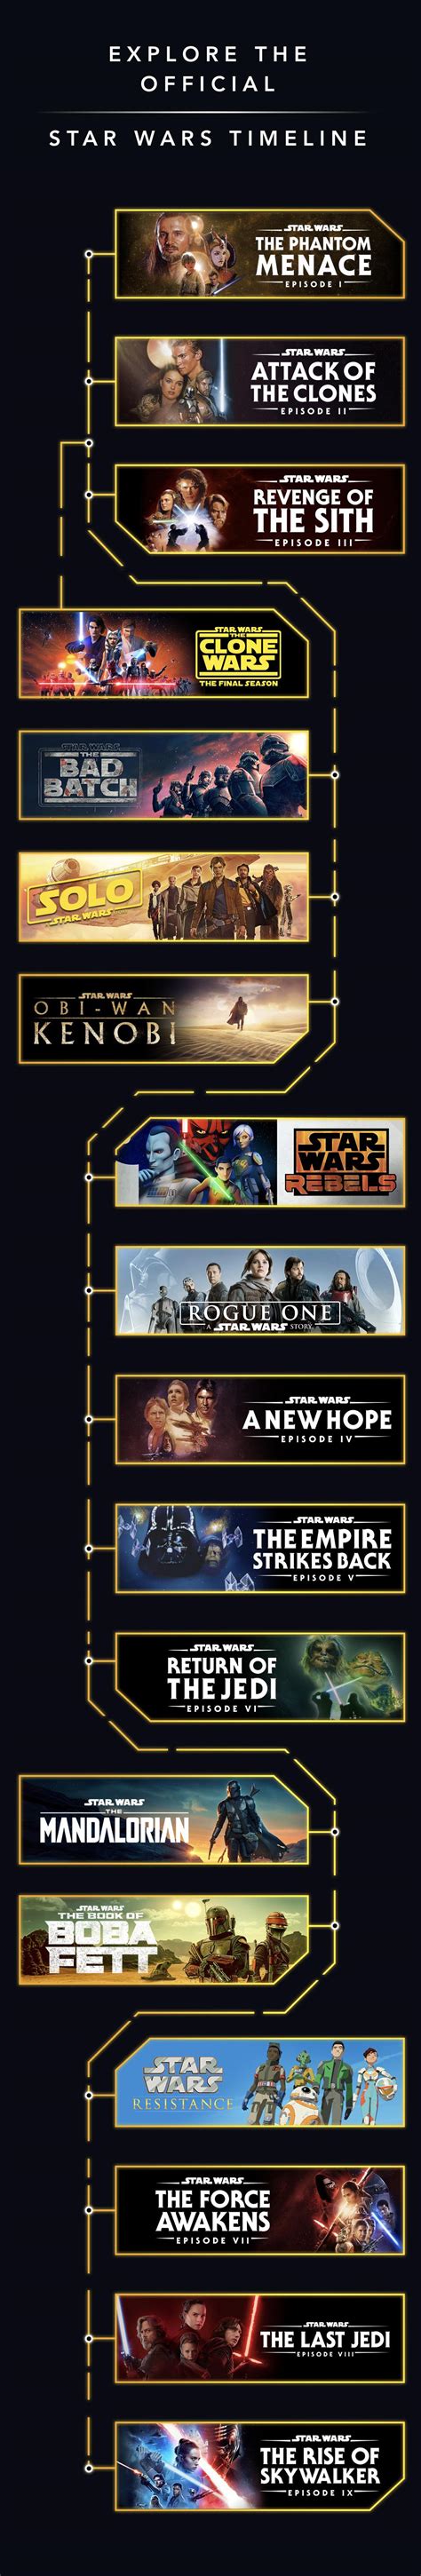 Geek 4 Star Wars Official Star Wars Timeline